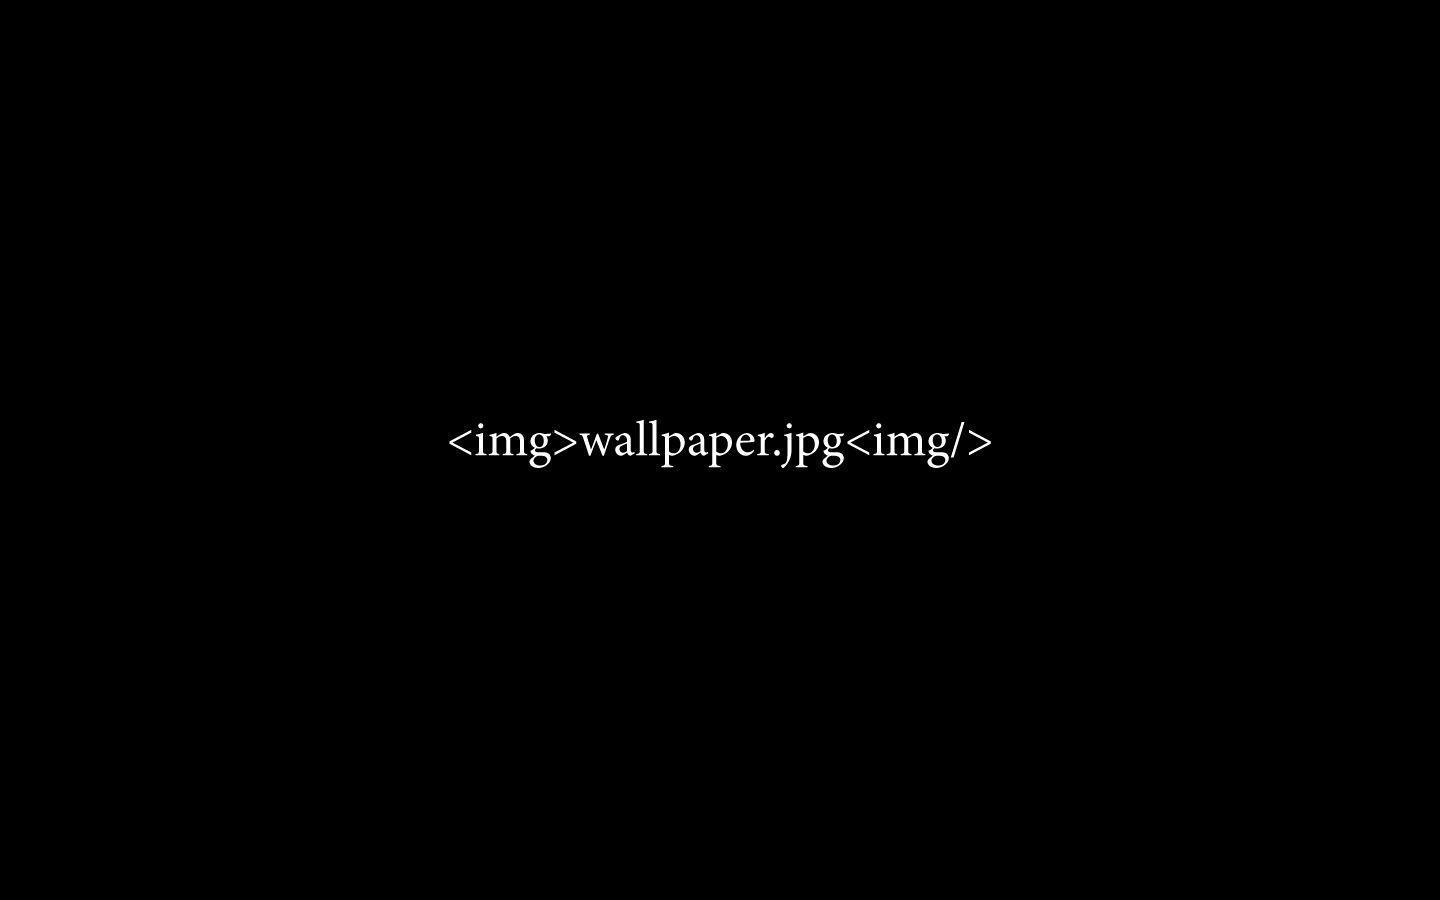 Wallpaper Programmer Security Geeks 768x510 #programmer